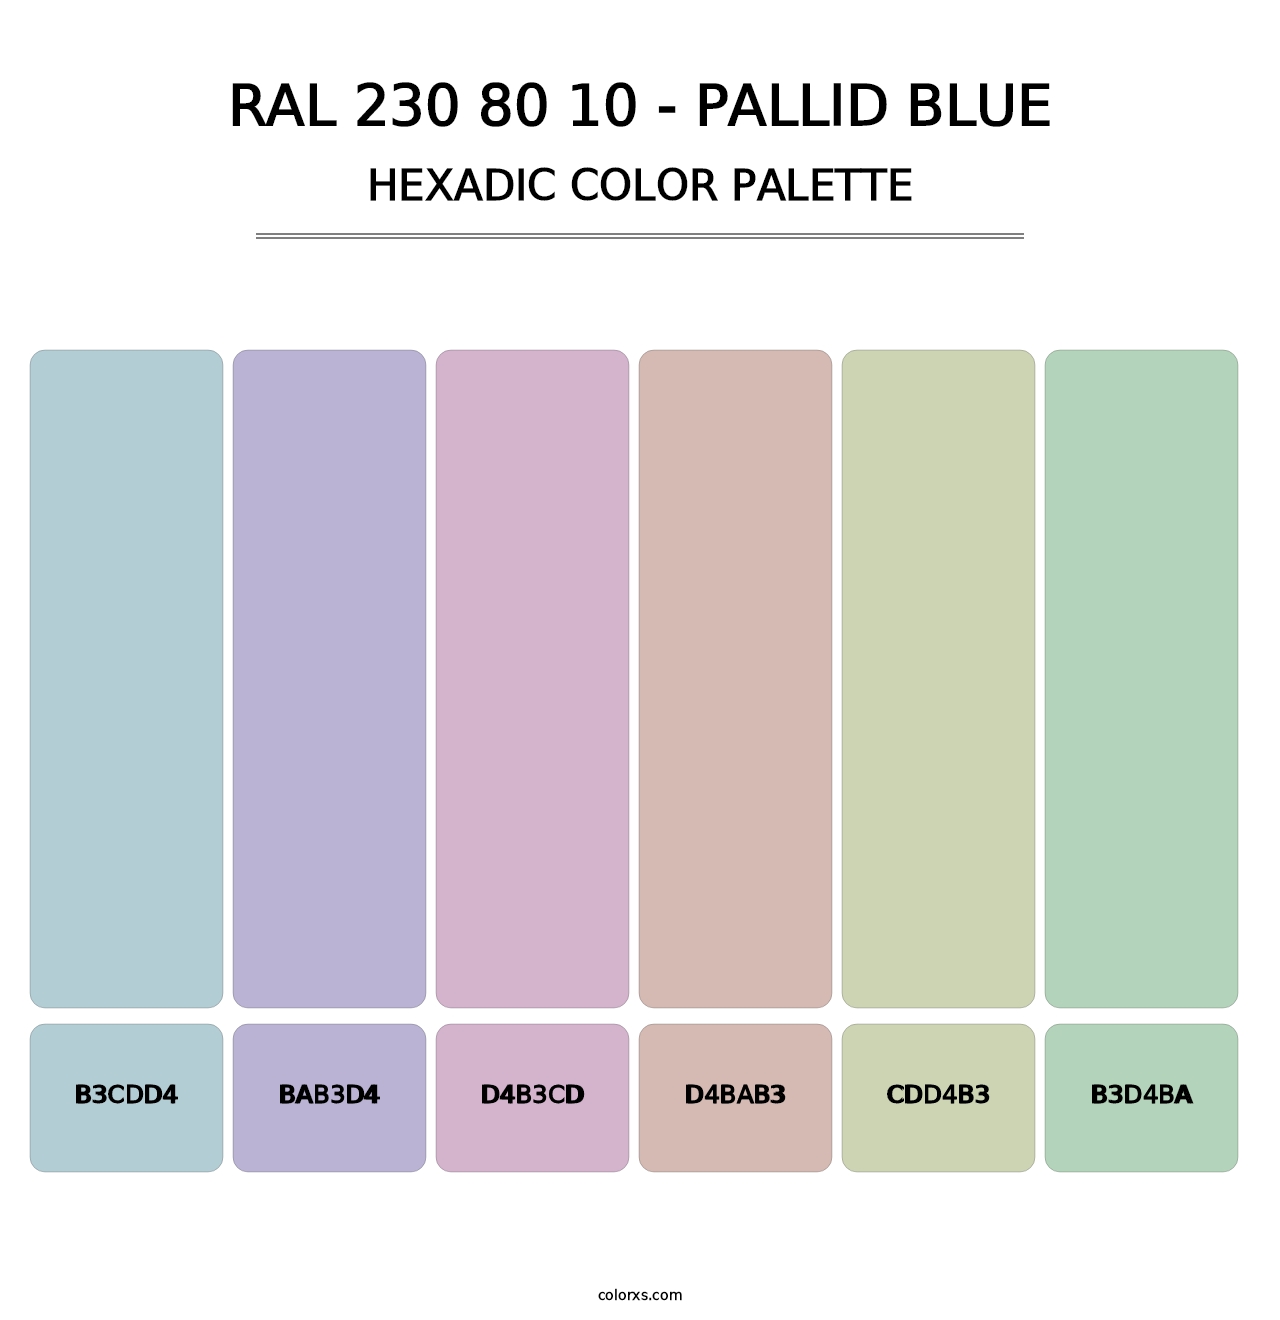 RAL 230 80 10 - Pallid Blue - Hexadic Color Palette